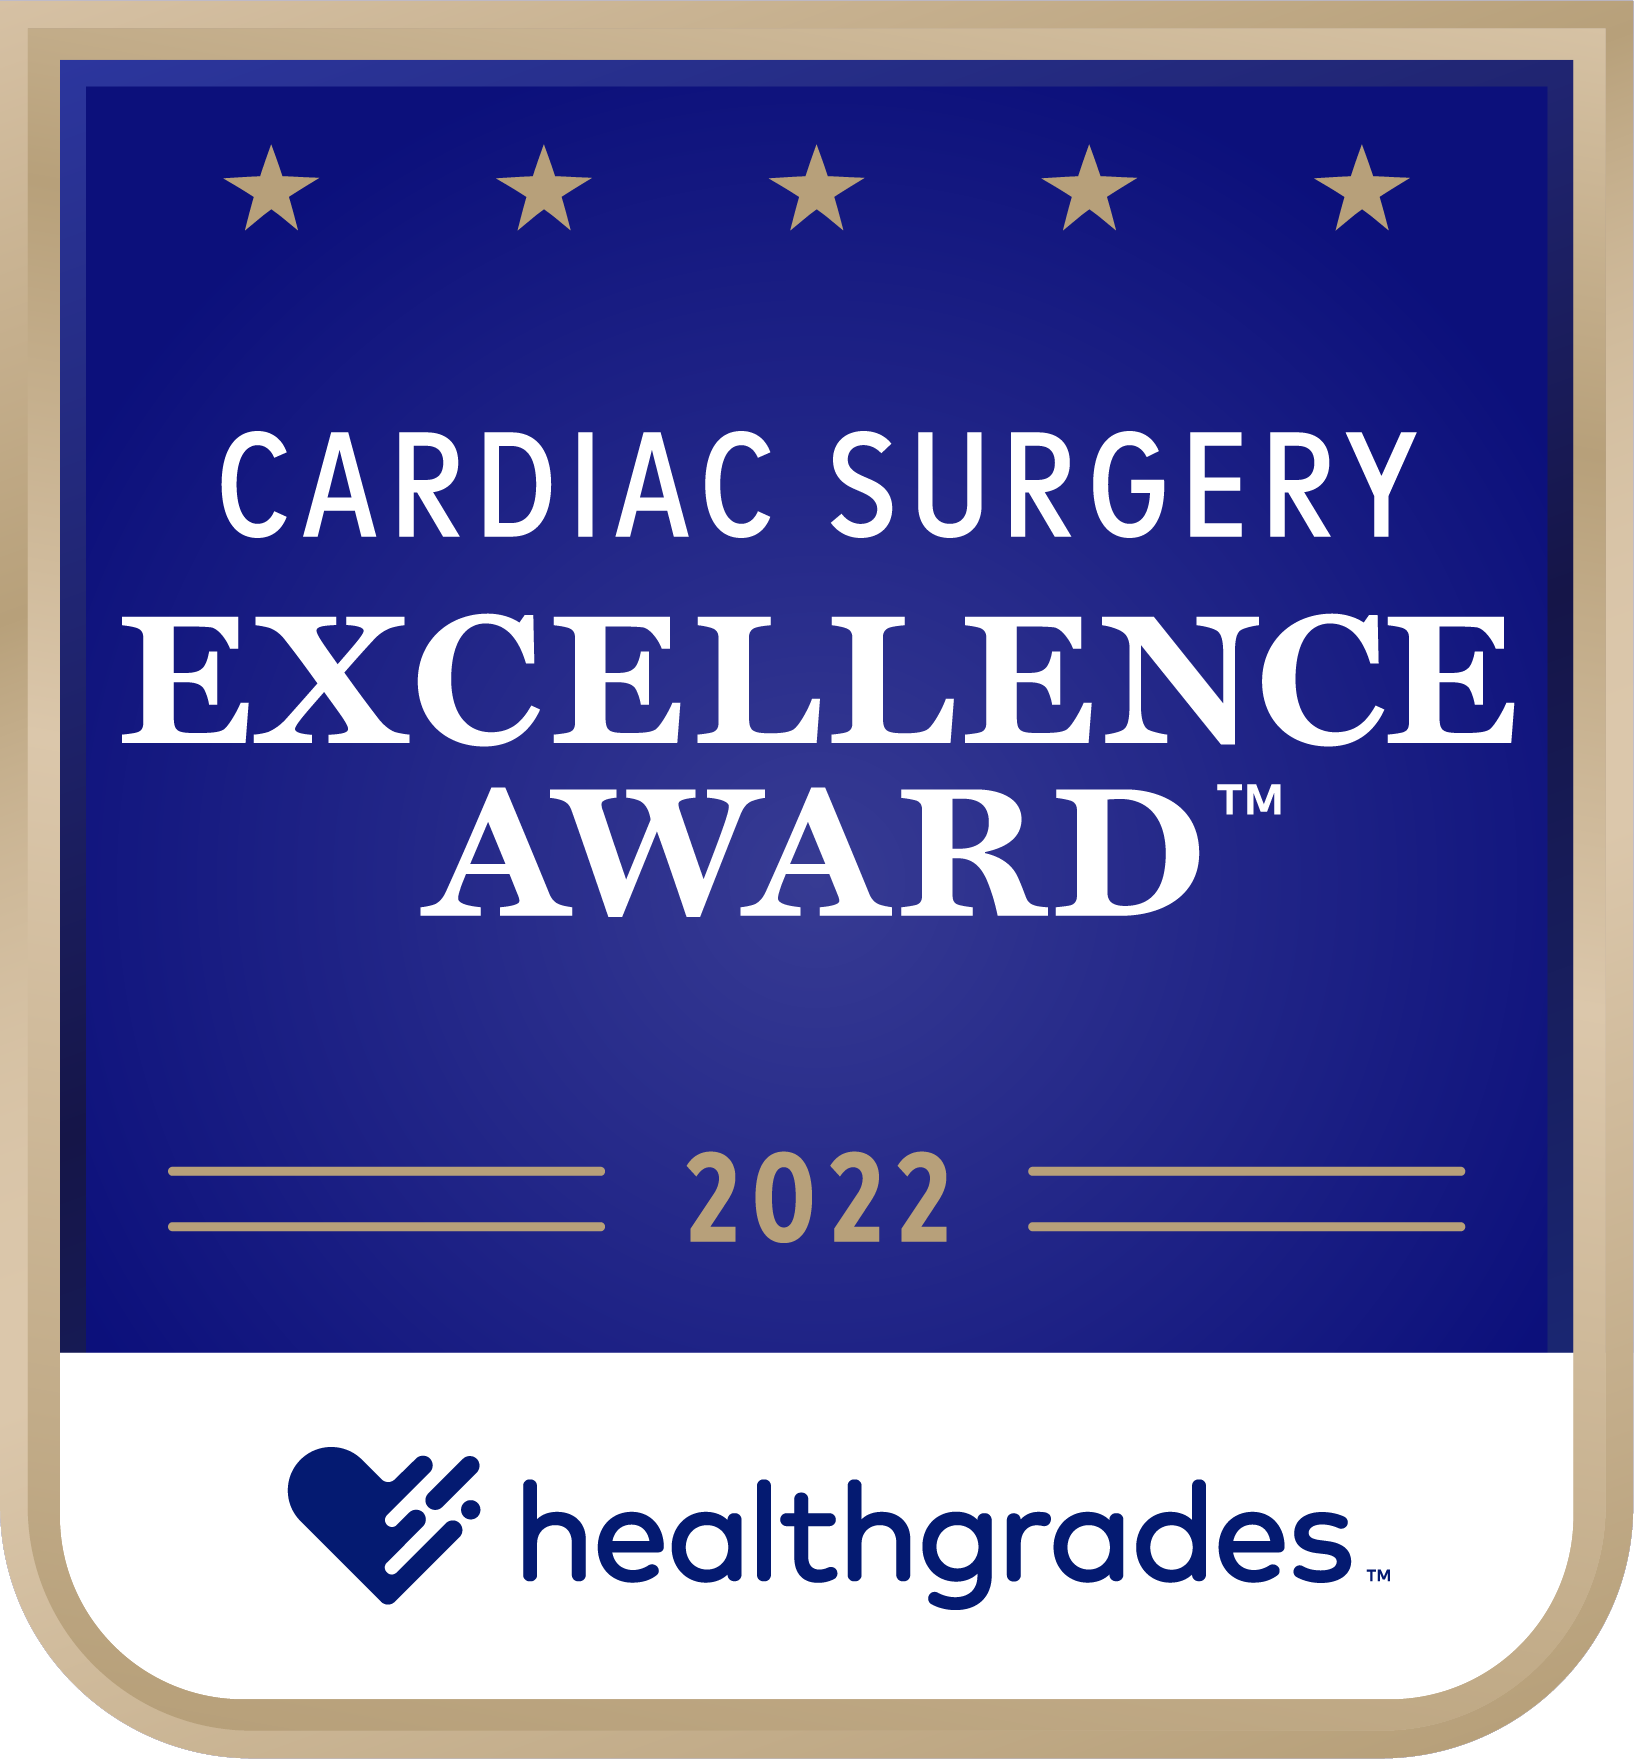 st. elizabeth's medical center earned cardiac surgery excellence award